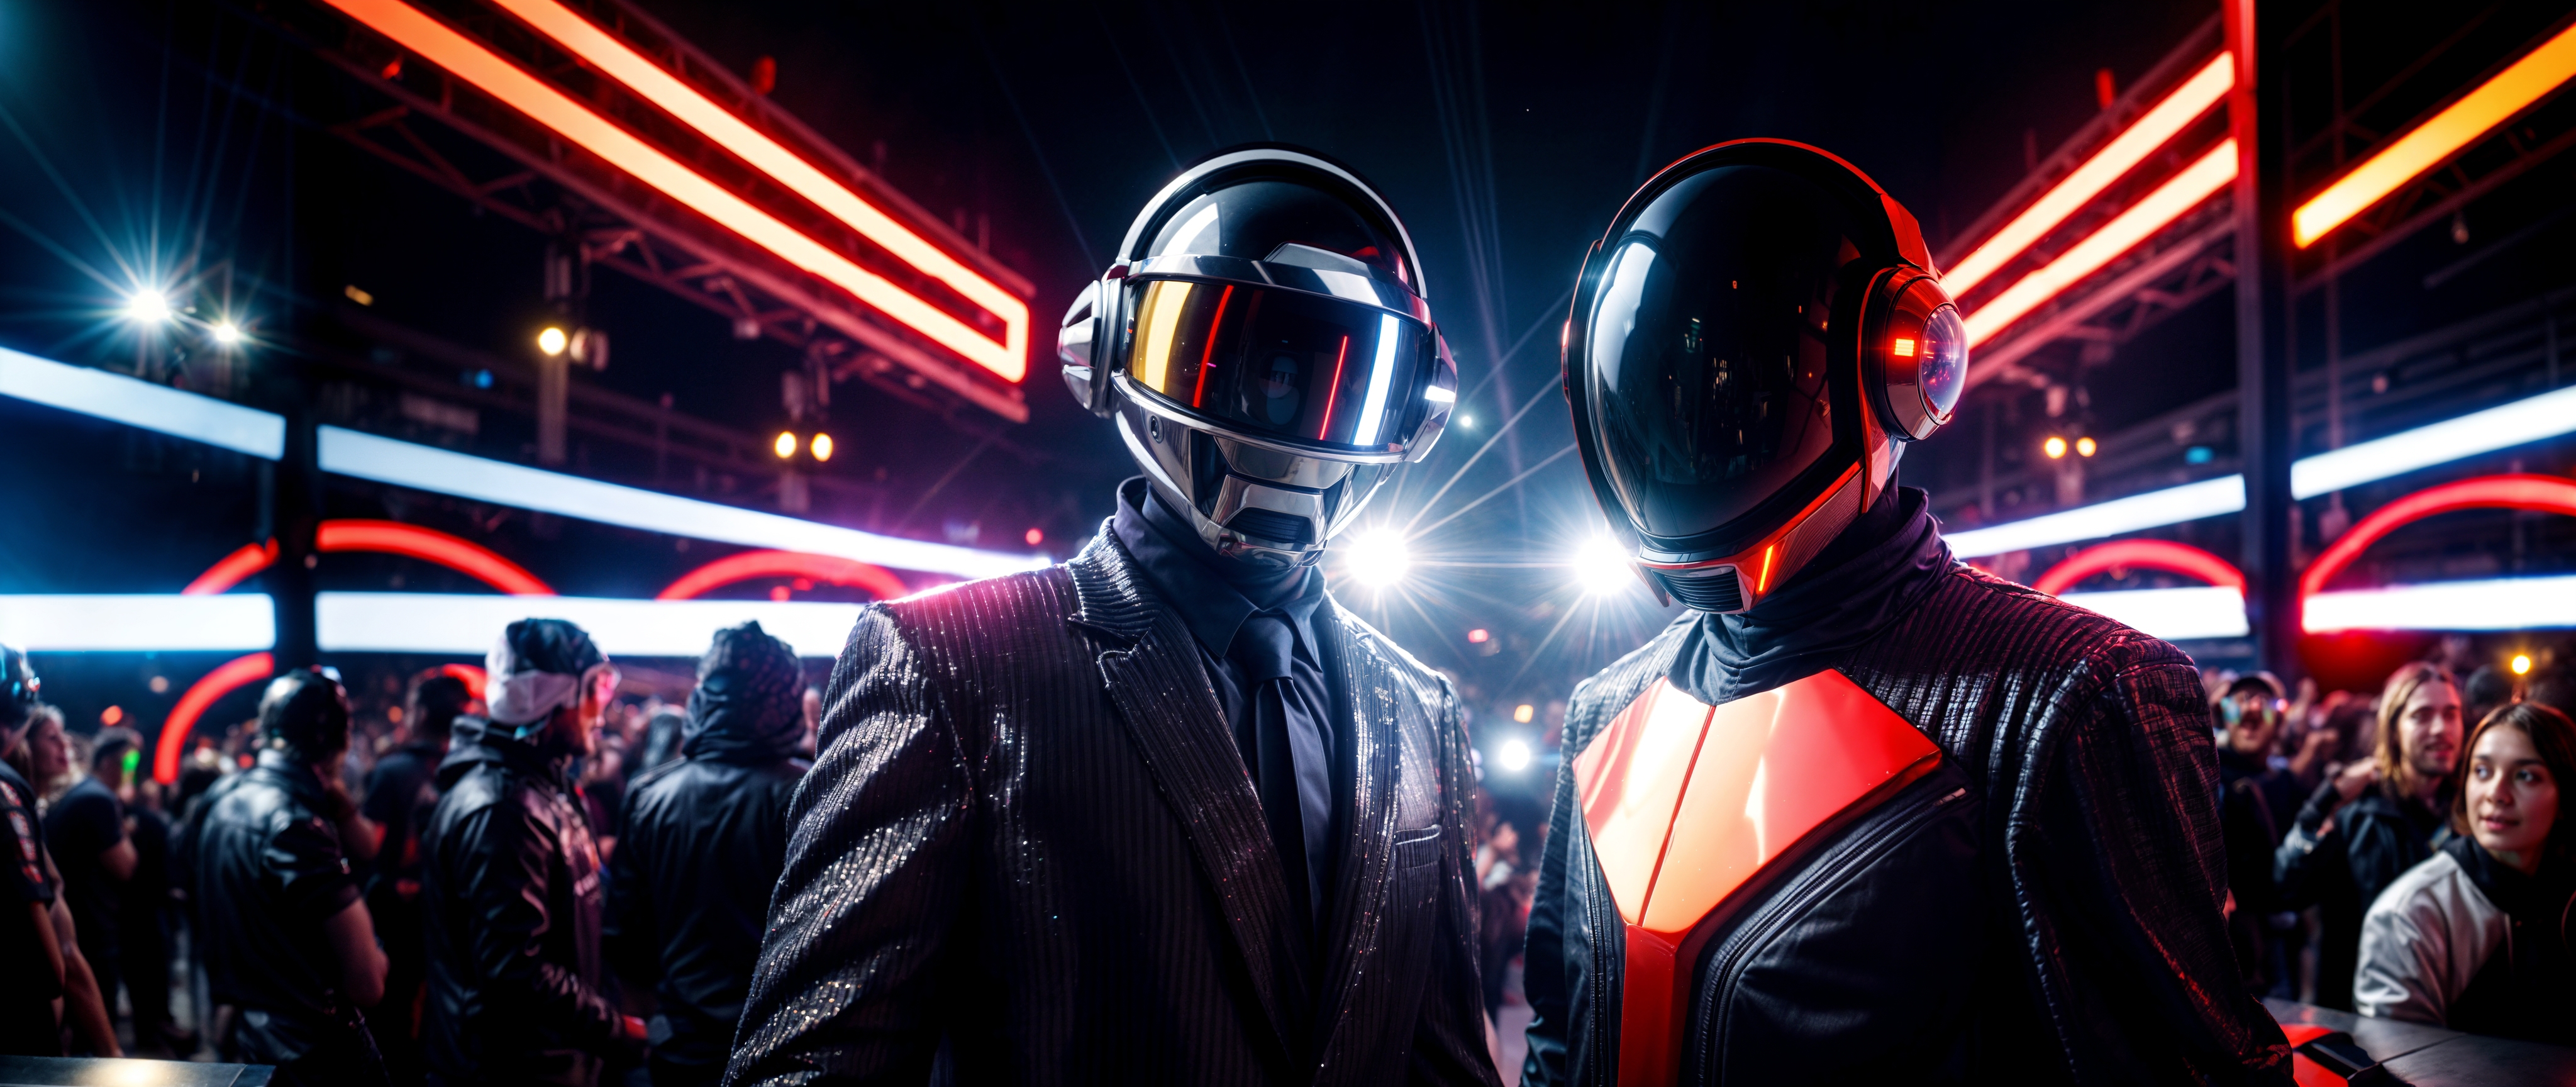 Daft Punk image by FiL_Design